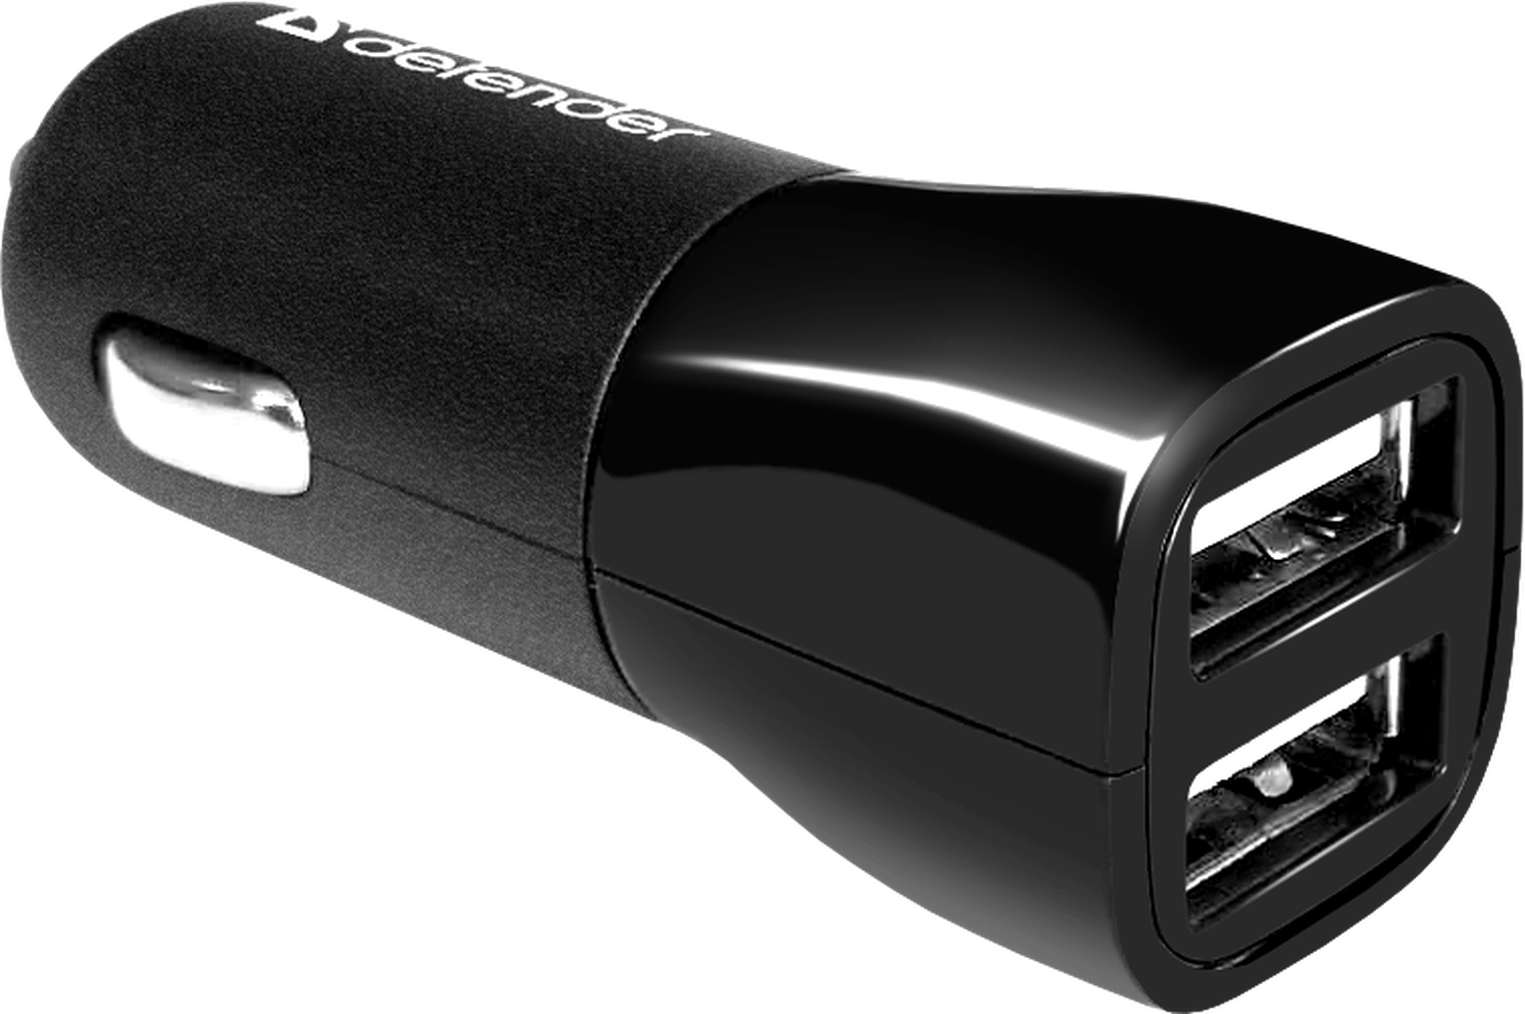 Авто зарядное устр-во DEFENDER  ECA-24 -2х USB, 5V/2.4A